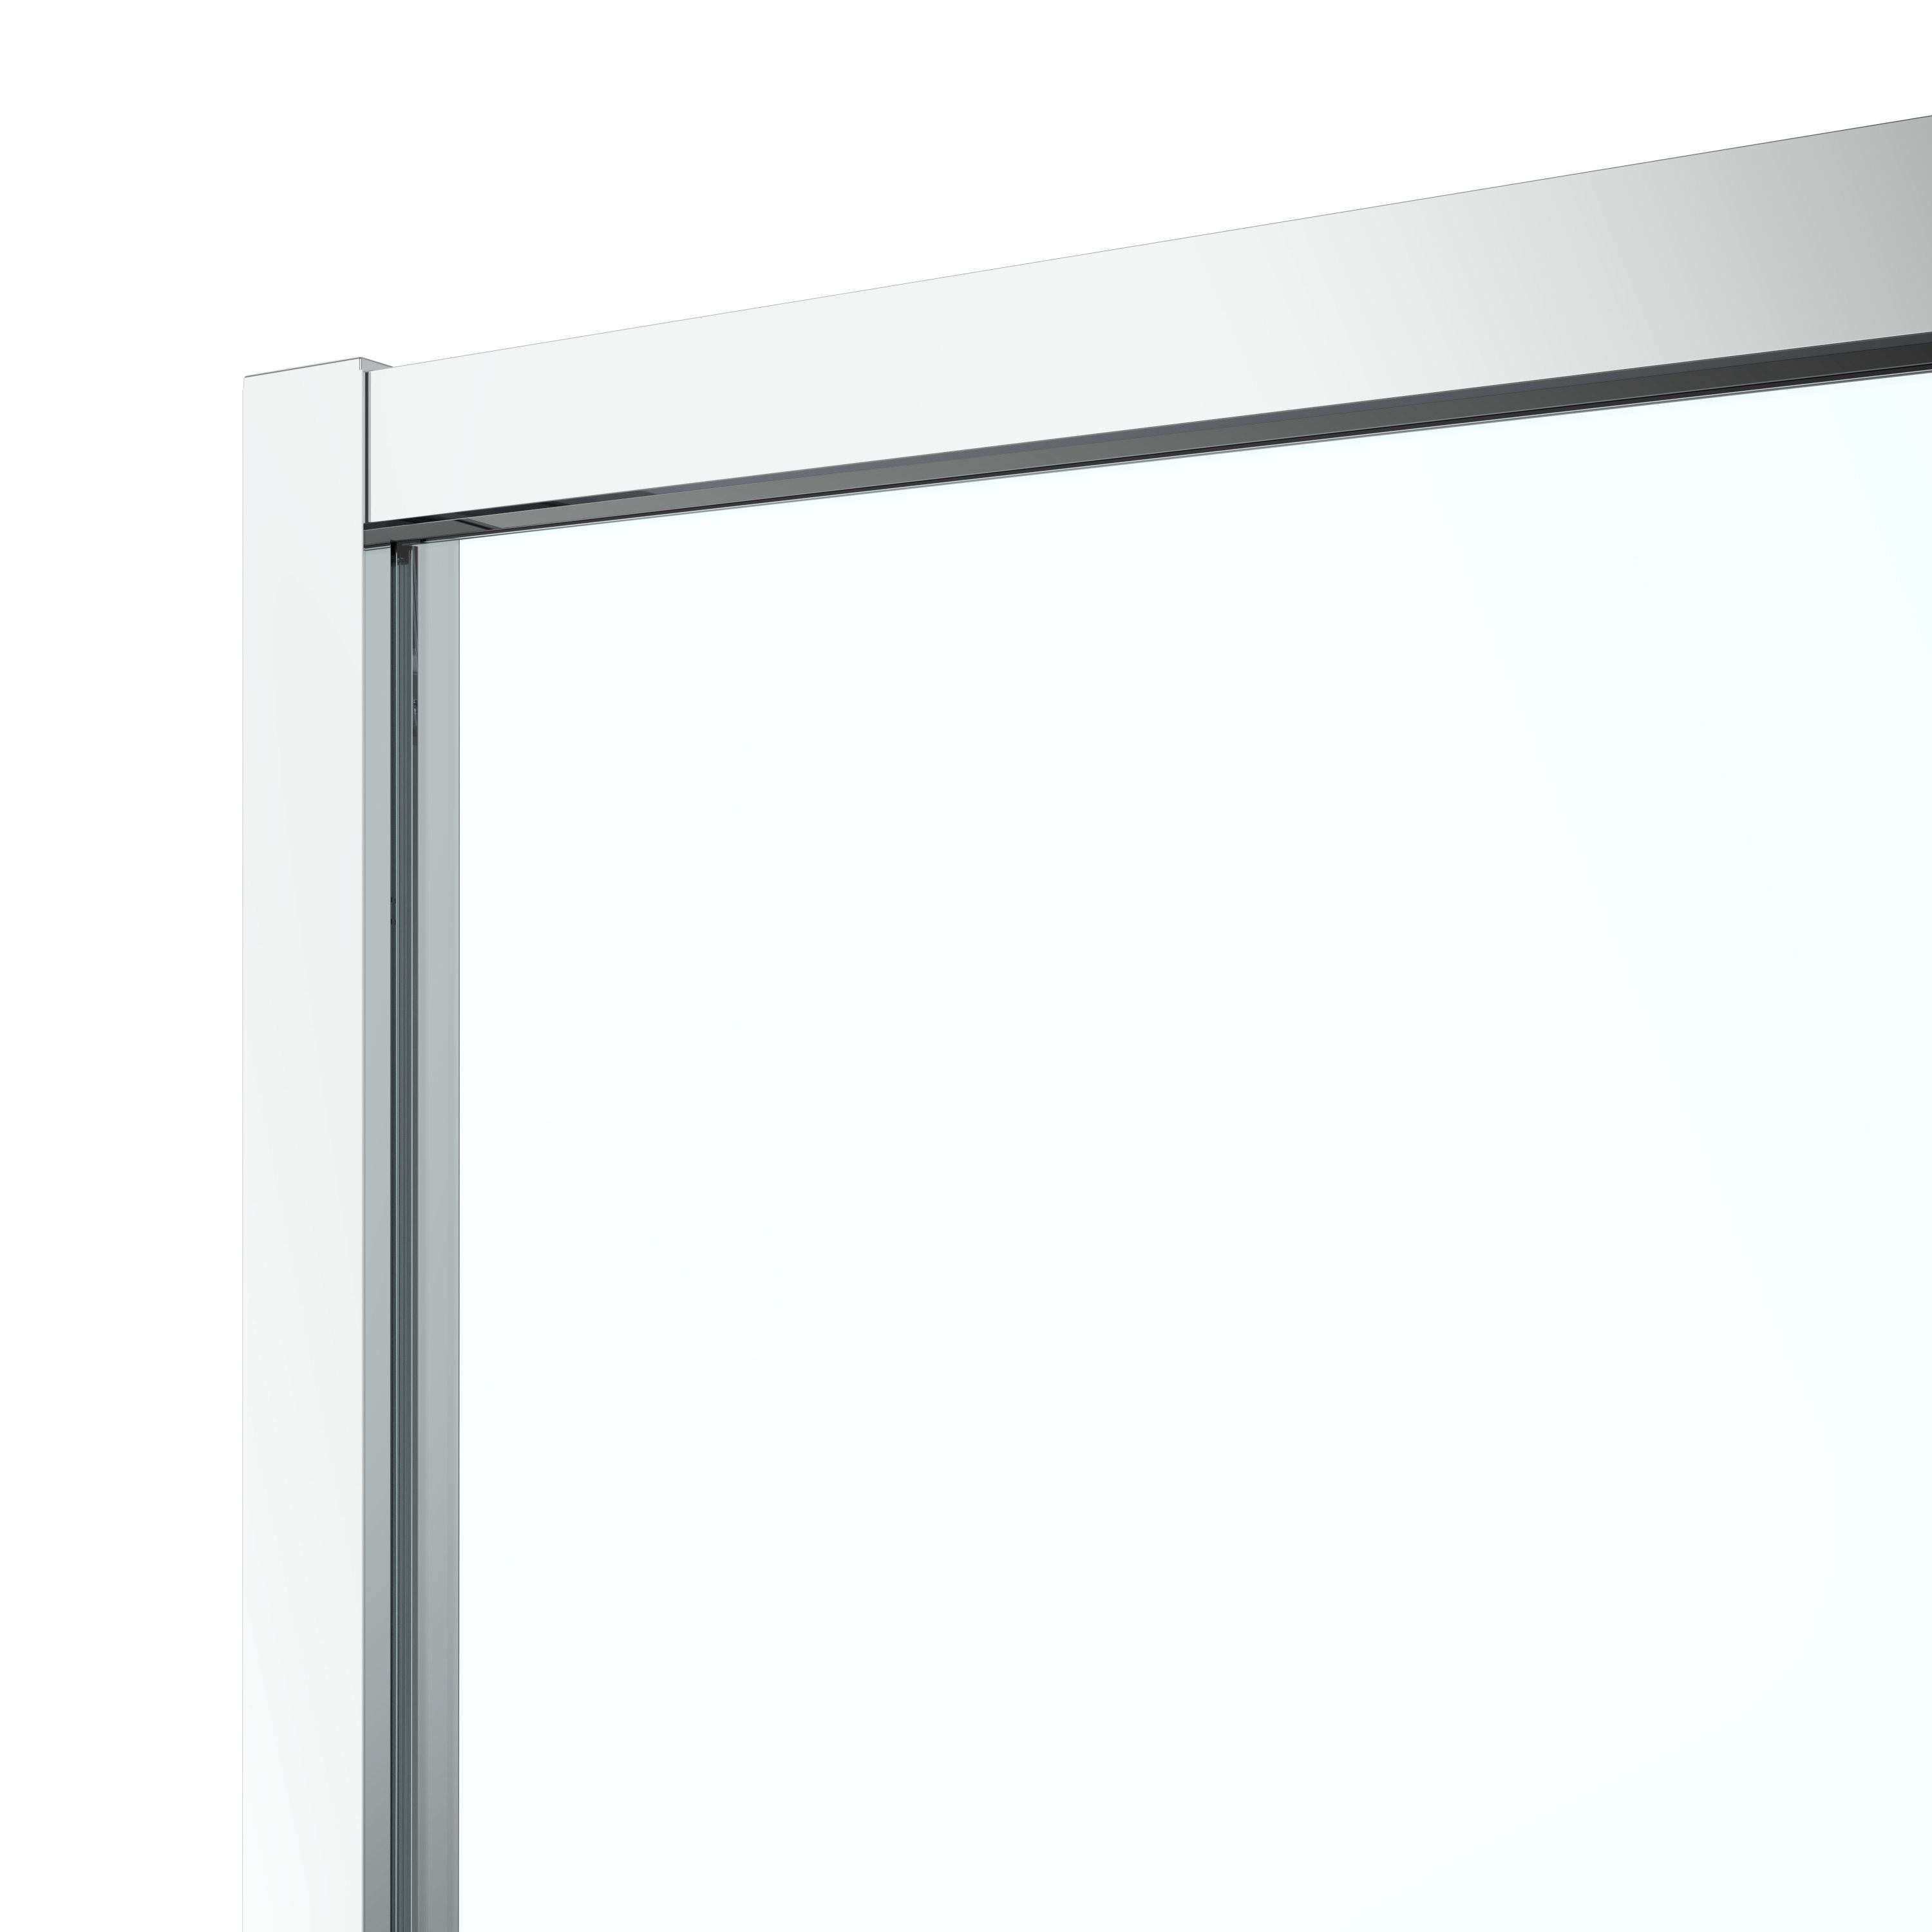 GoodHome Ledava Minimal frame Chrome effect Clear glass Sliding Shower Door (H)195cm (W)140cm